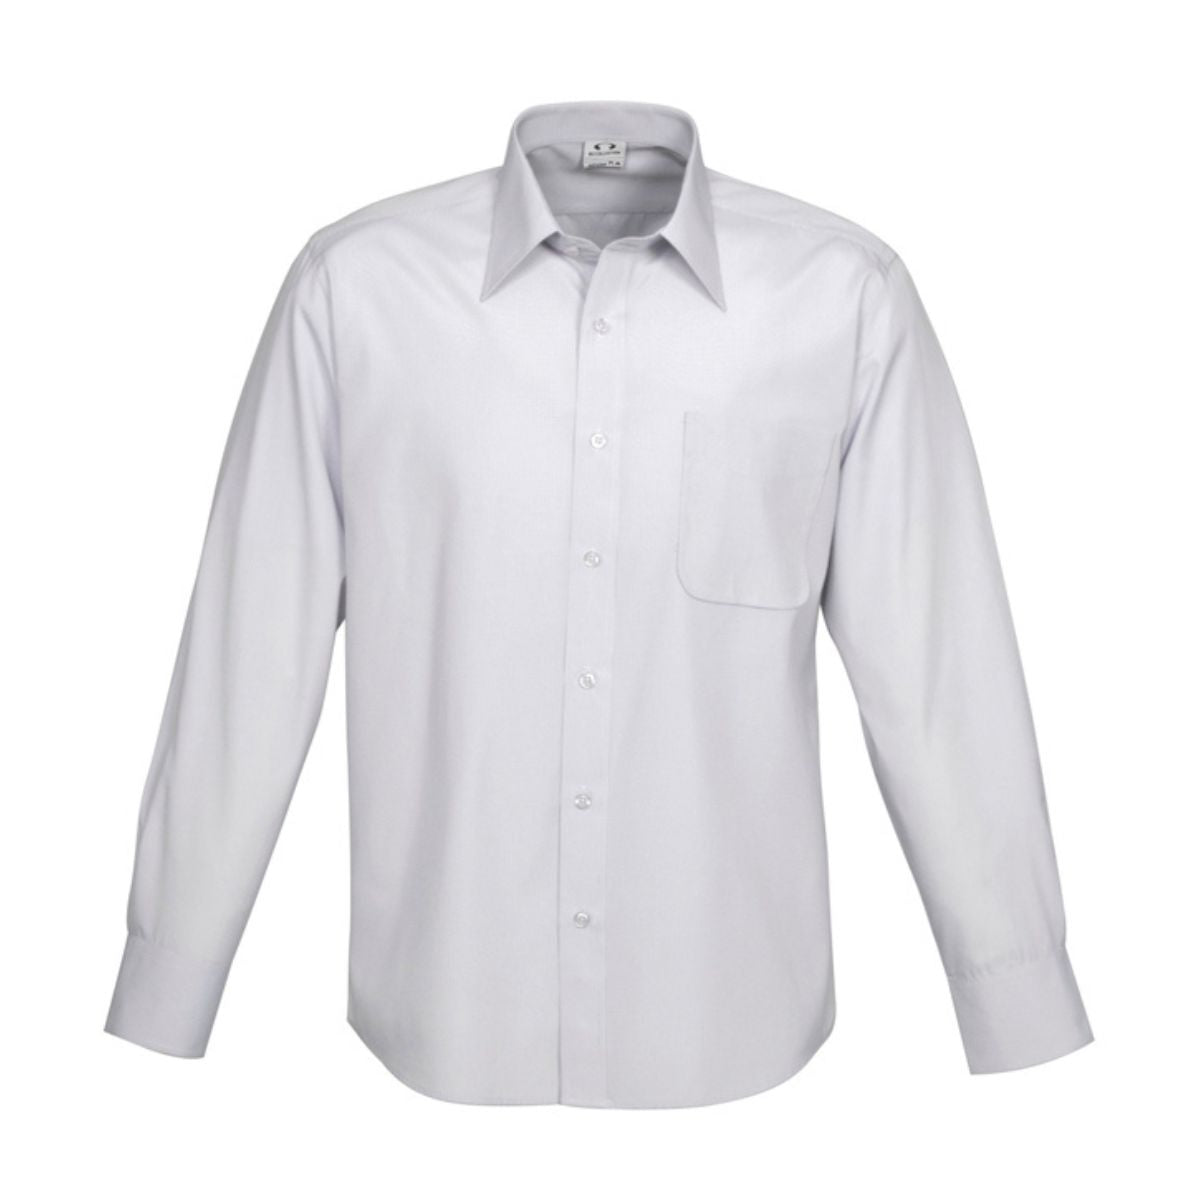 Biz Collection Men's Ambassador Long Sleeve Shirt S29510